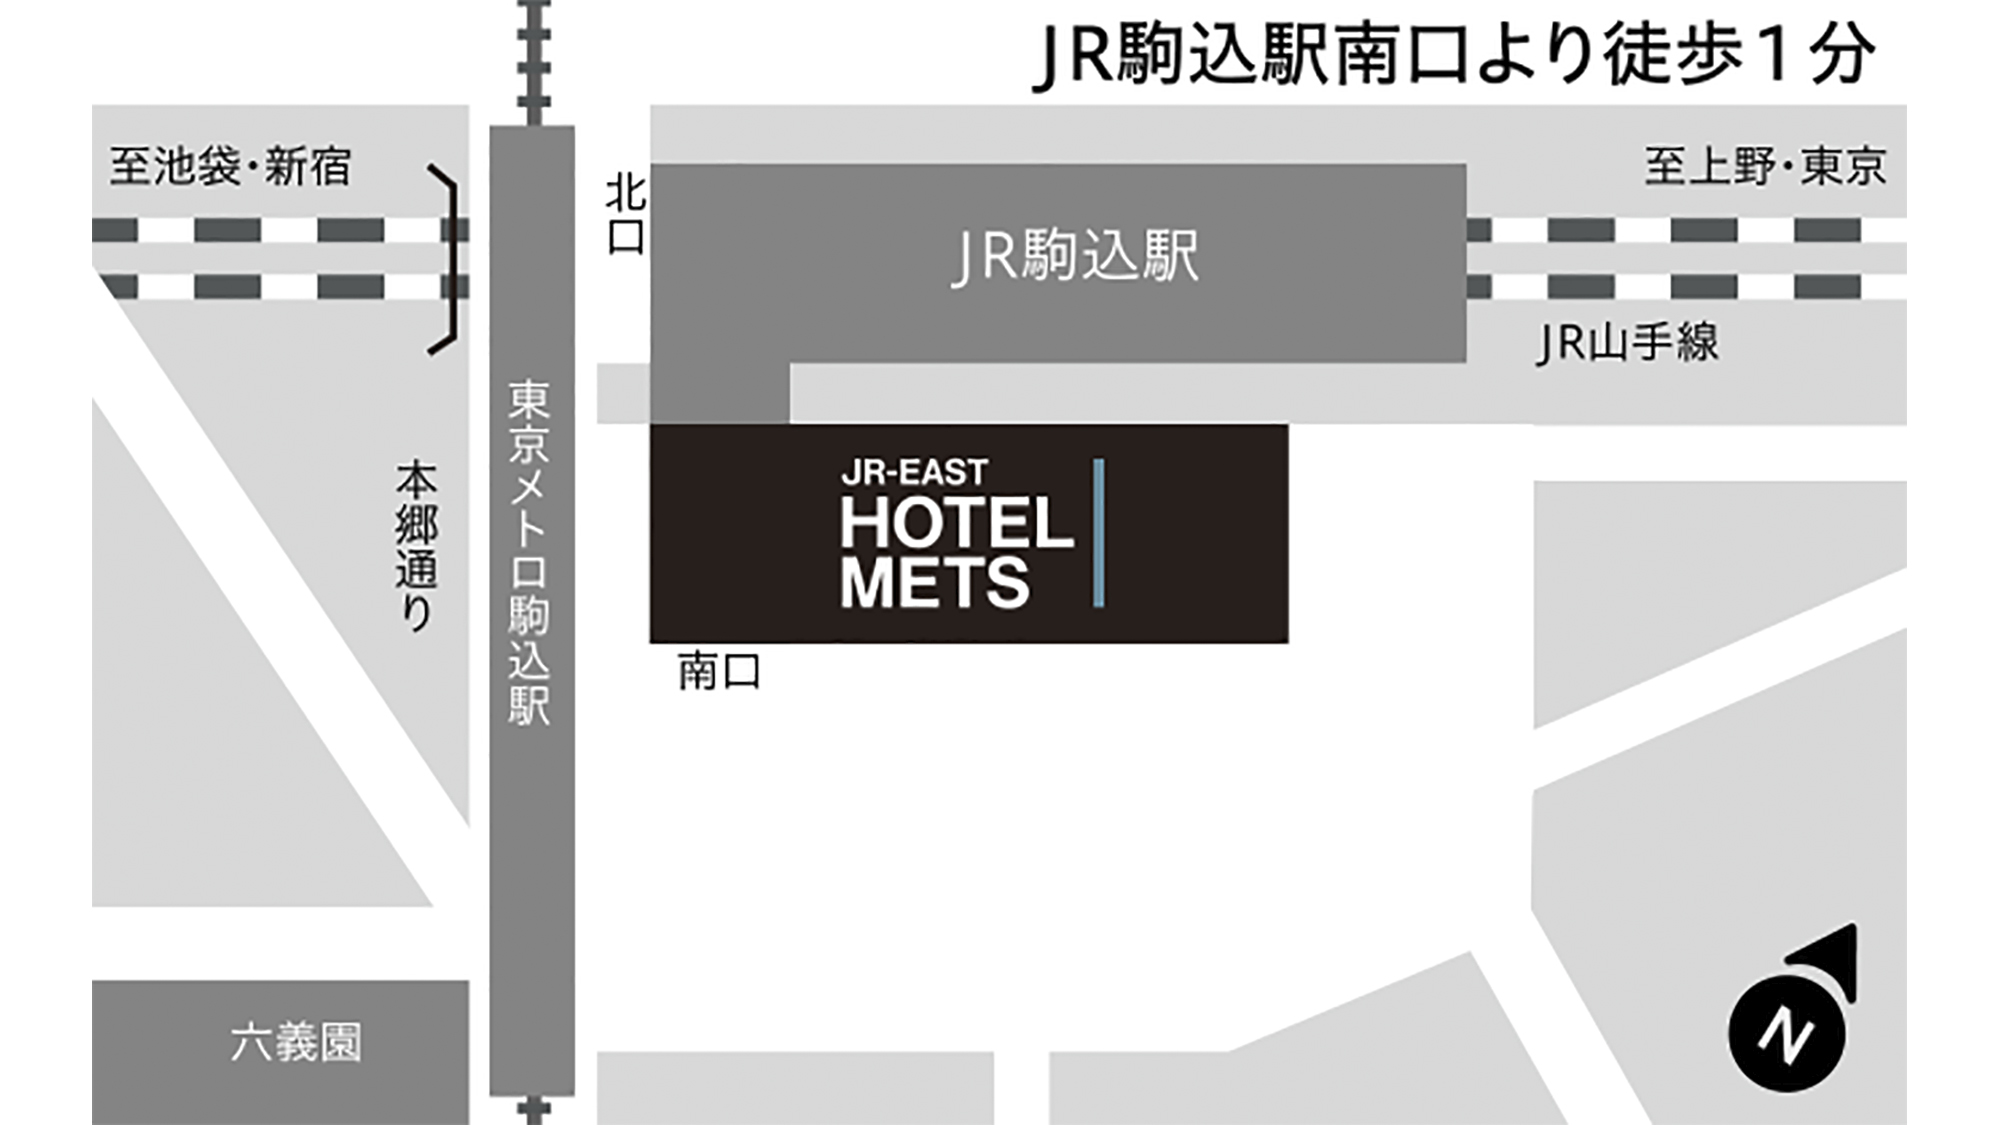 JR 東日本 Mets 飯店駒込